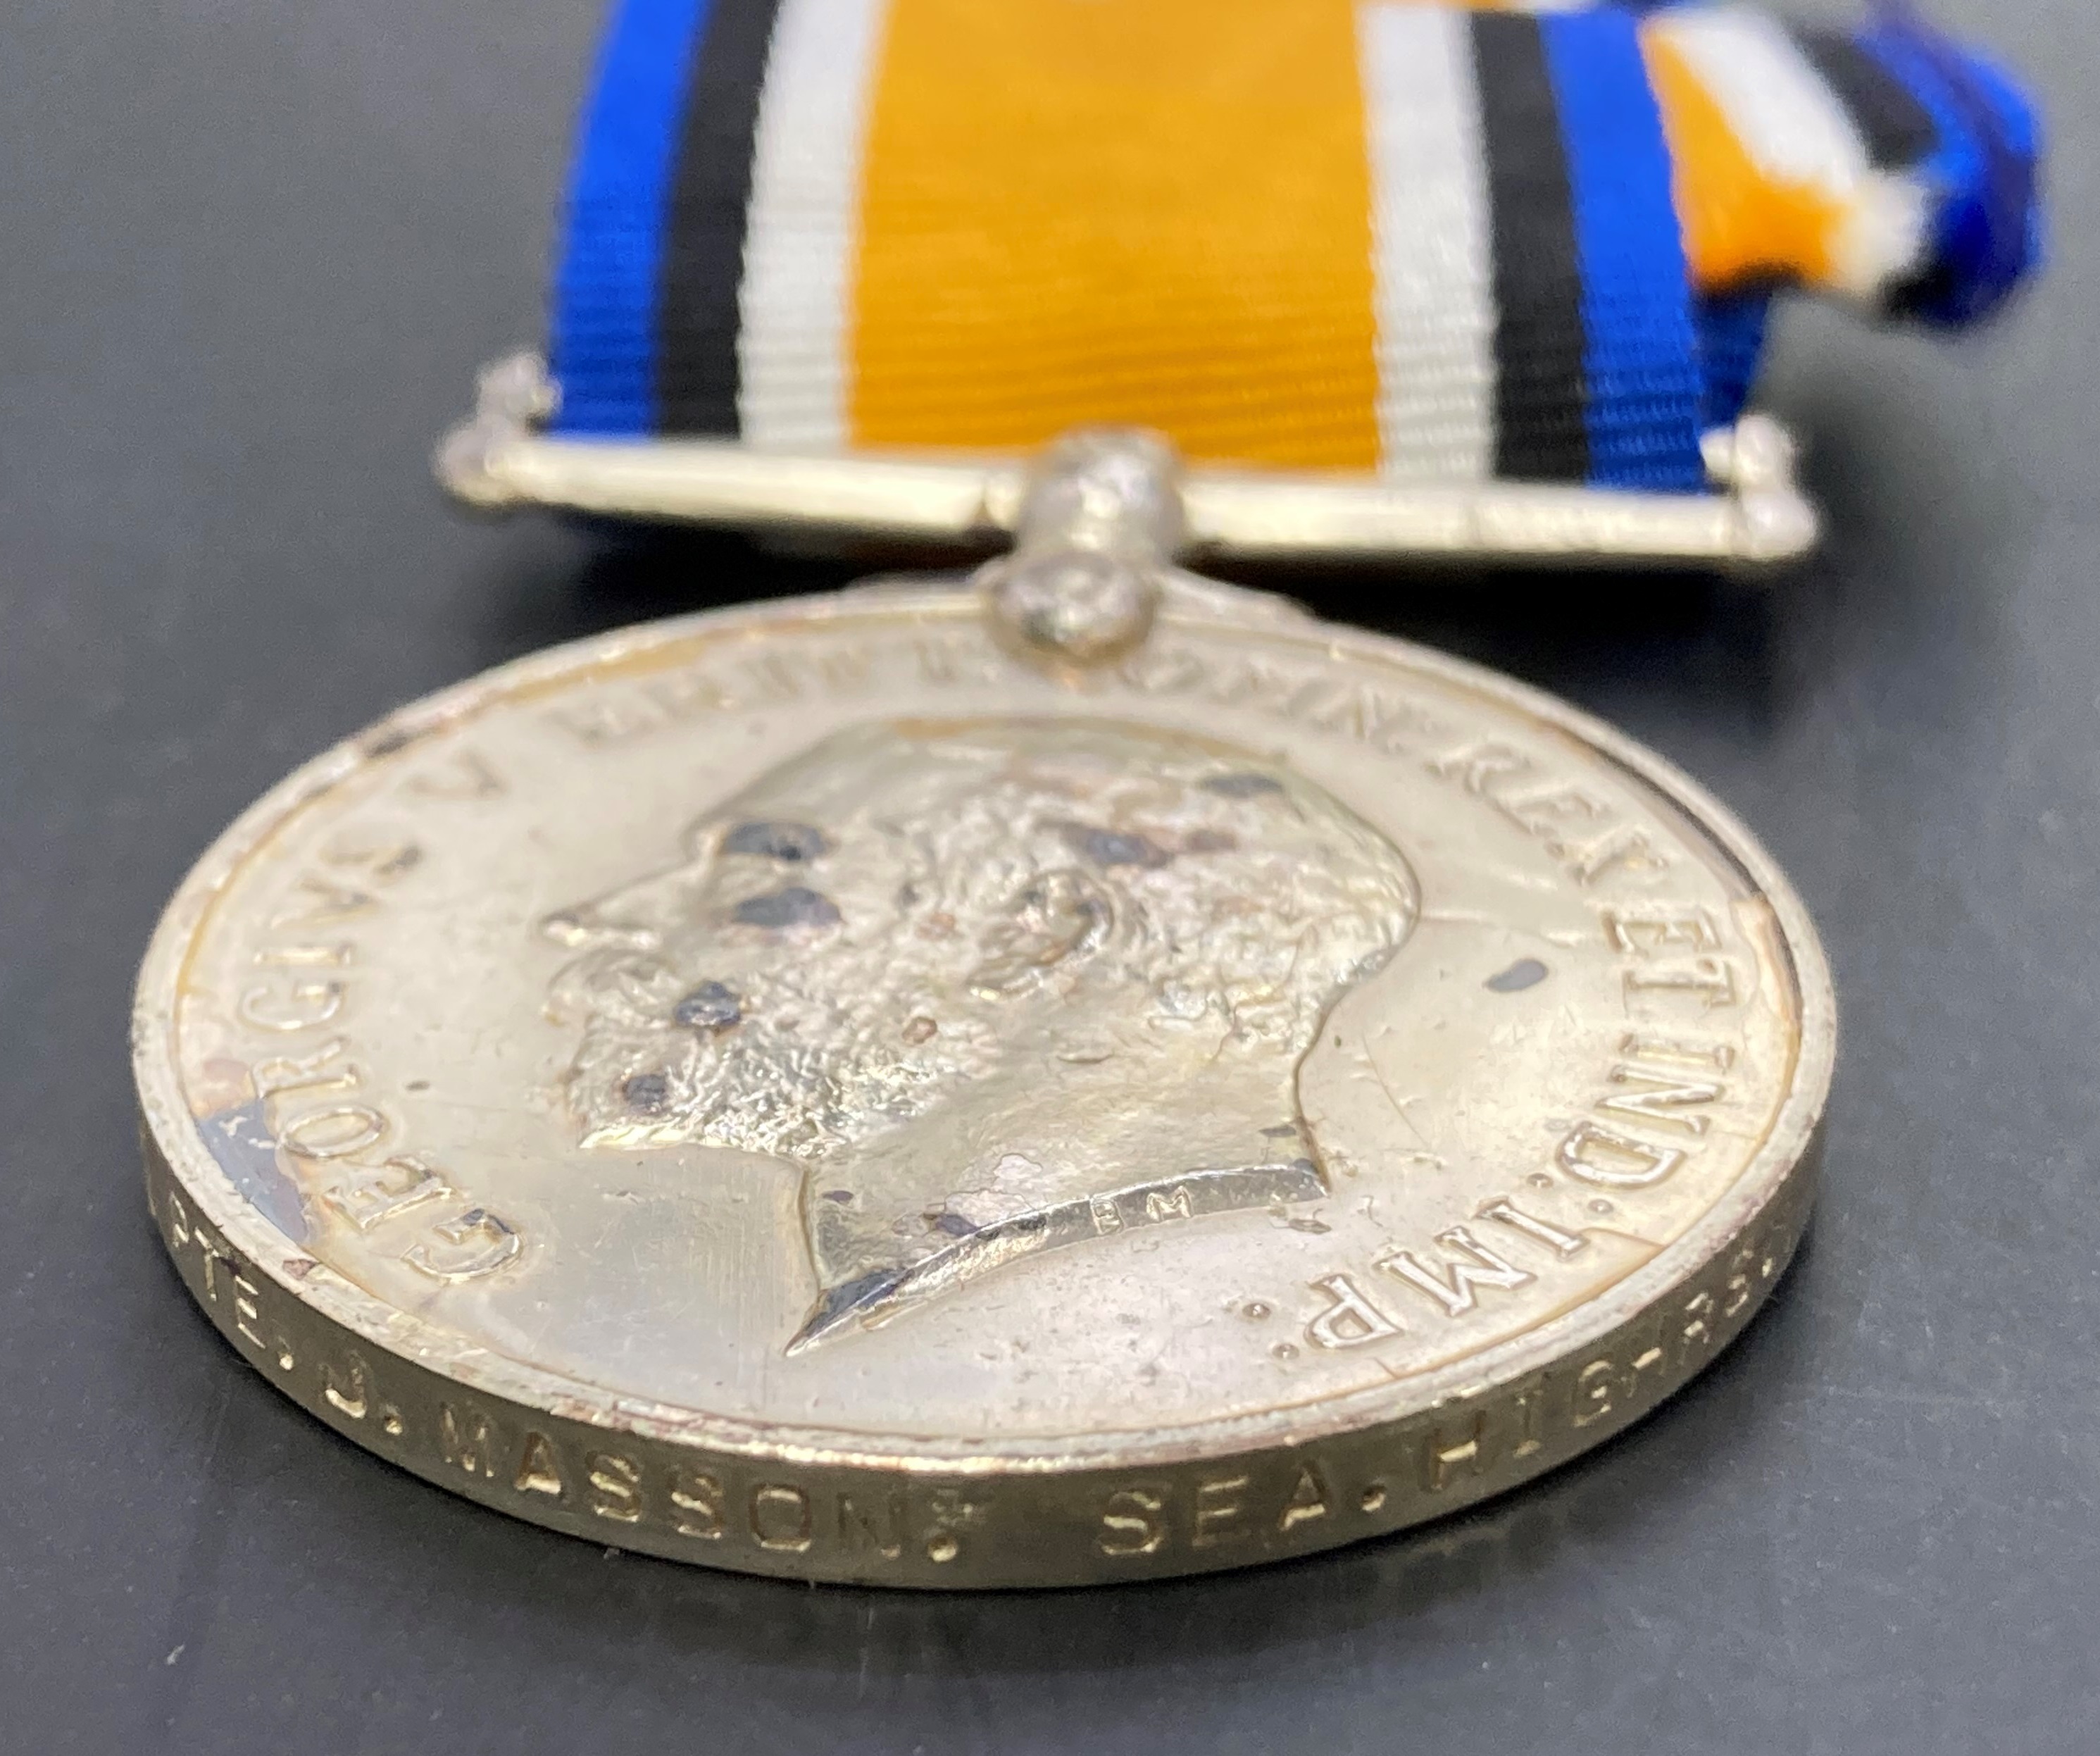 Three First World War medals - 1914 Star, - Image 3 of 4